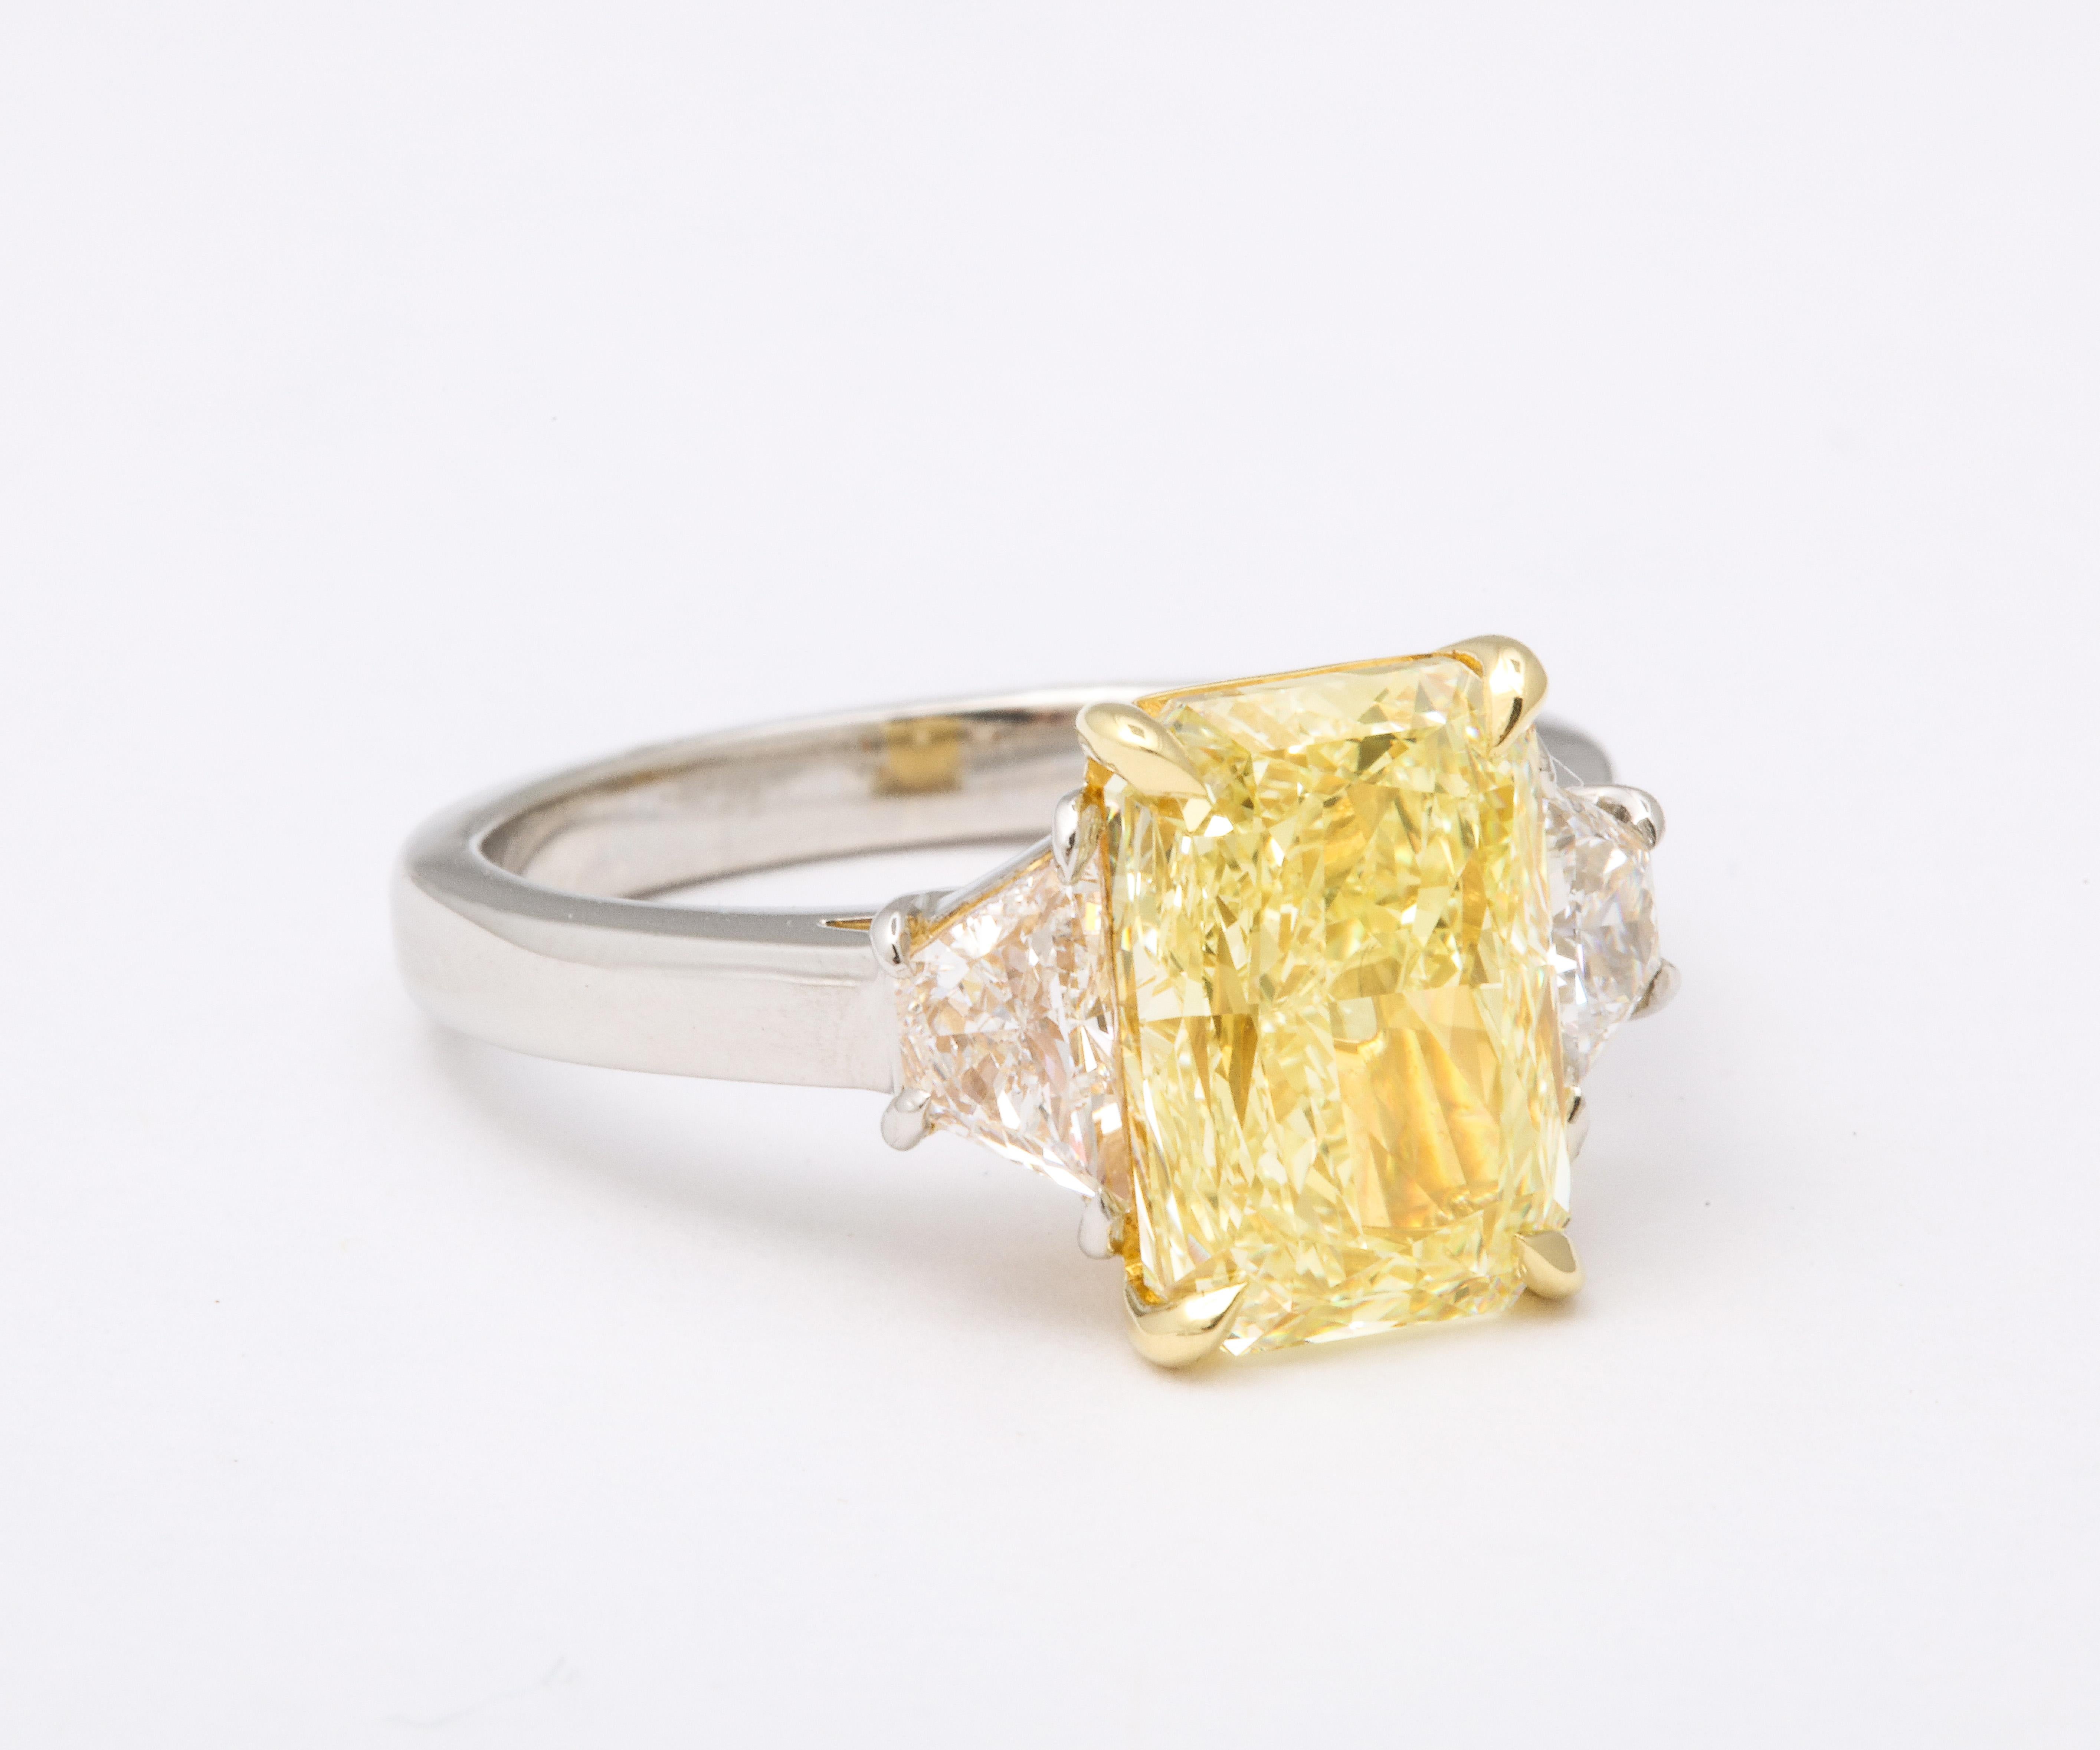 4 carat yellow diamond engagement rings